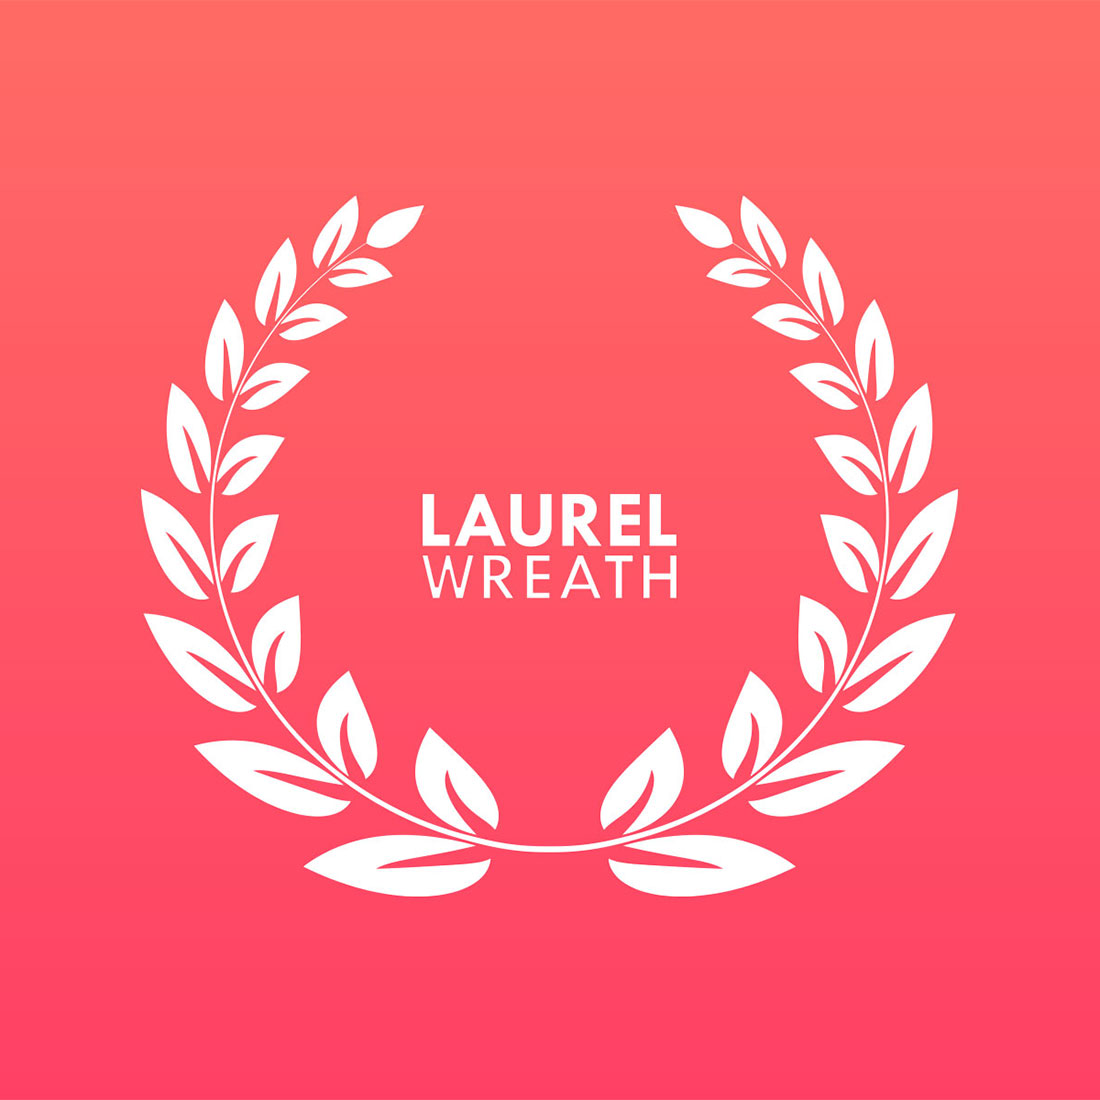 Laurel Wreath Leaf Element Gradient Vector Illustration cover image.